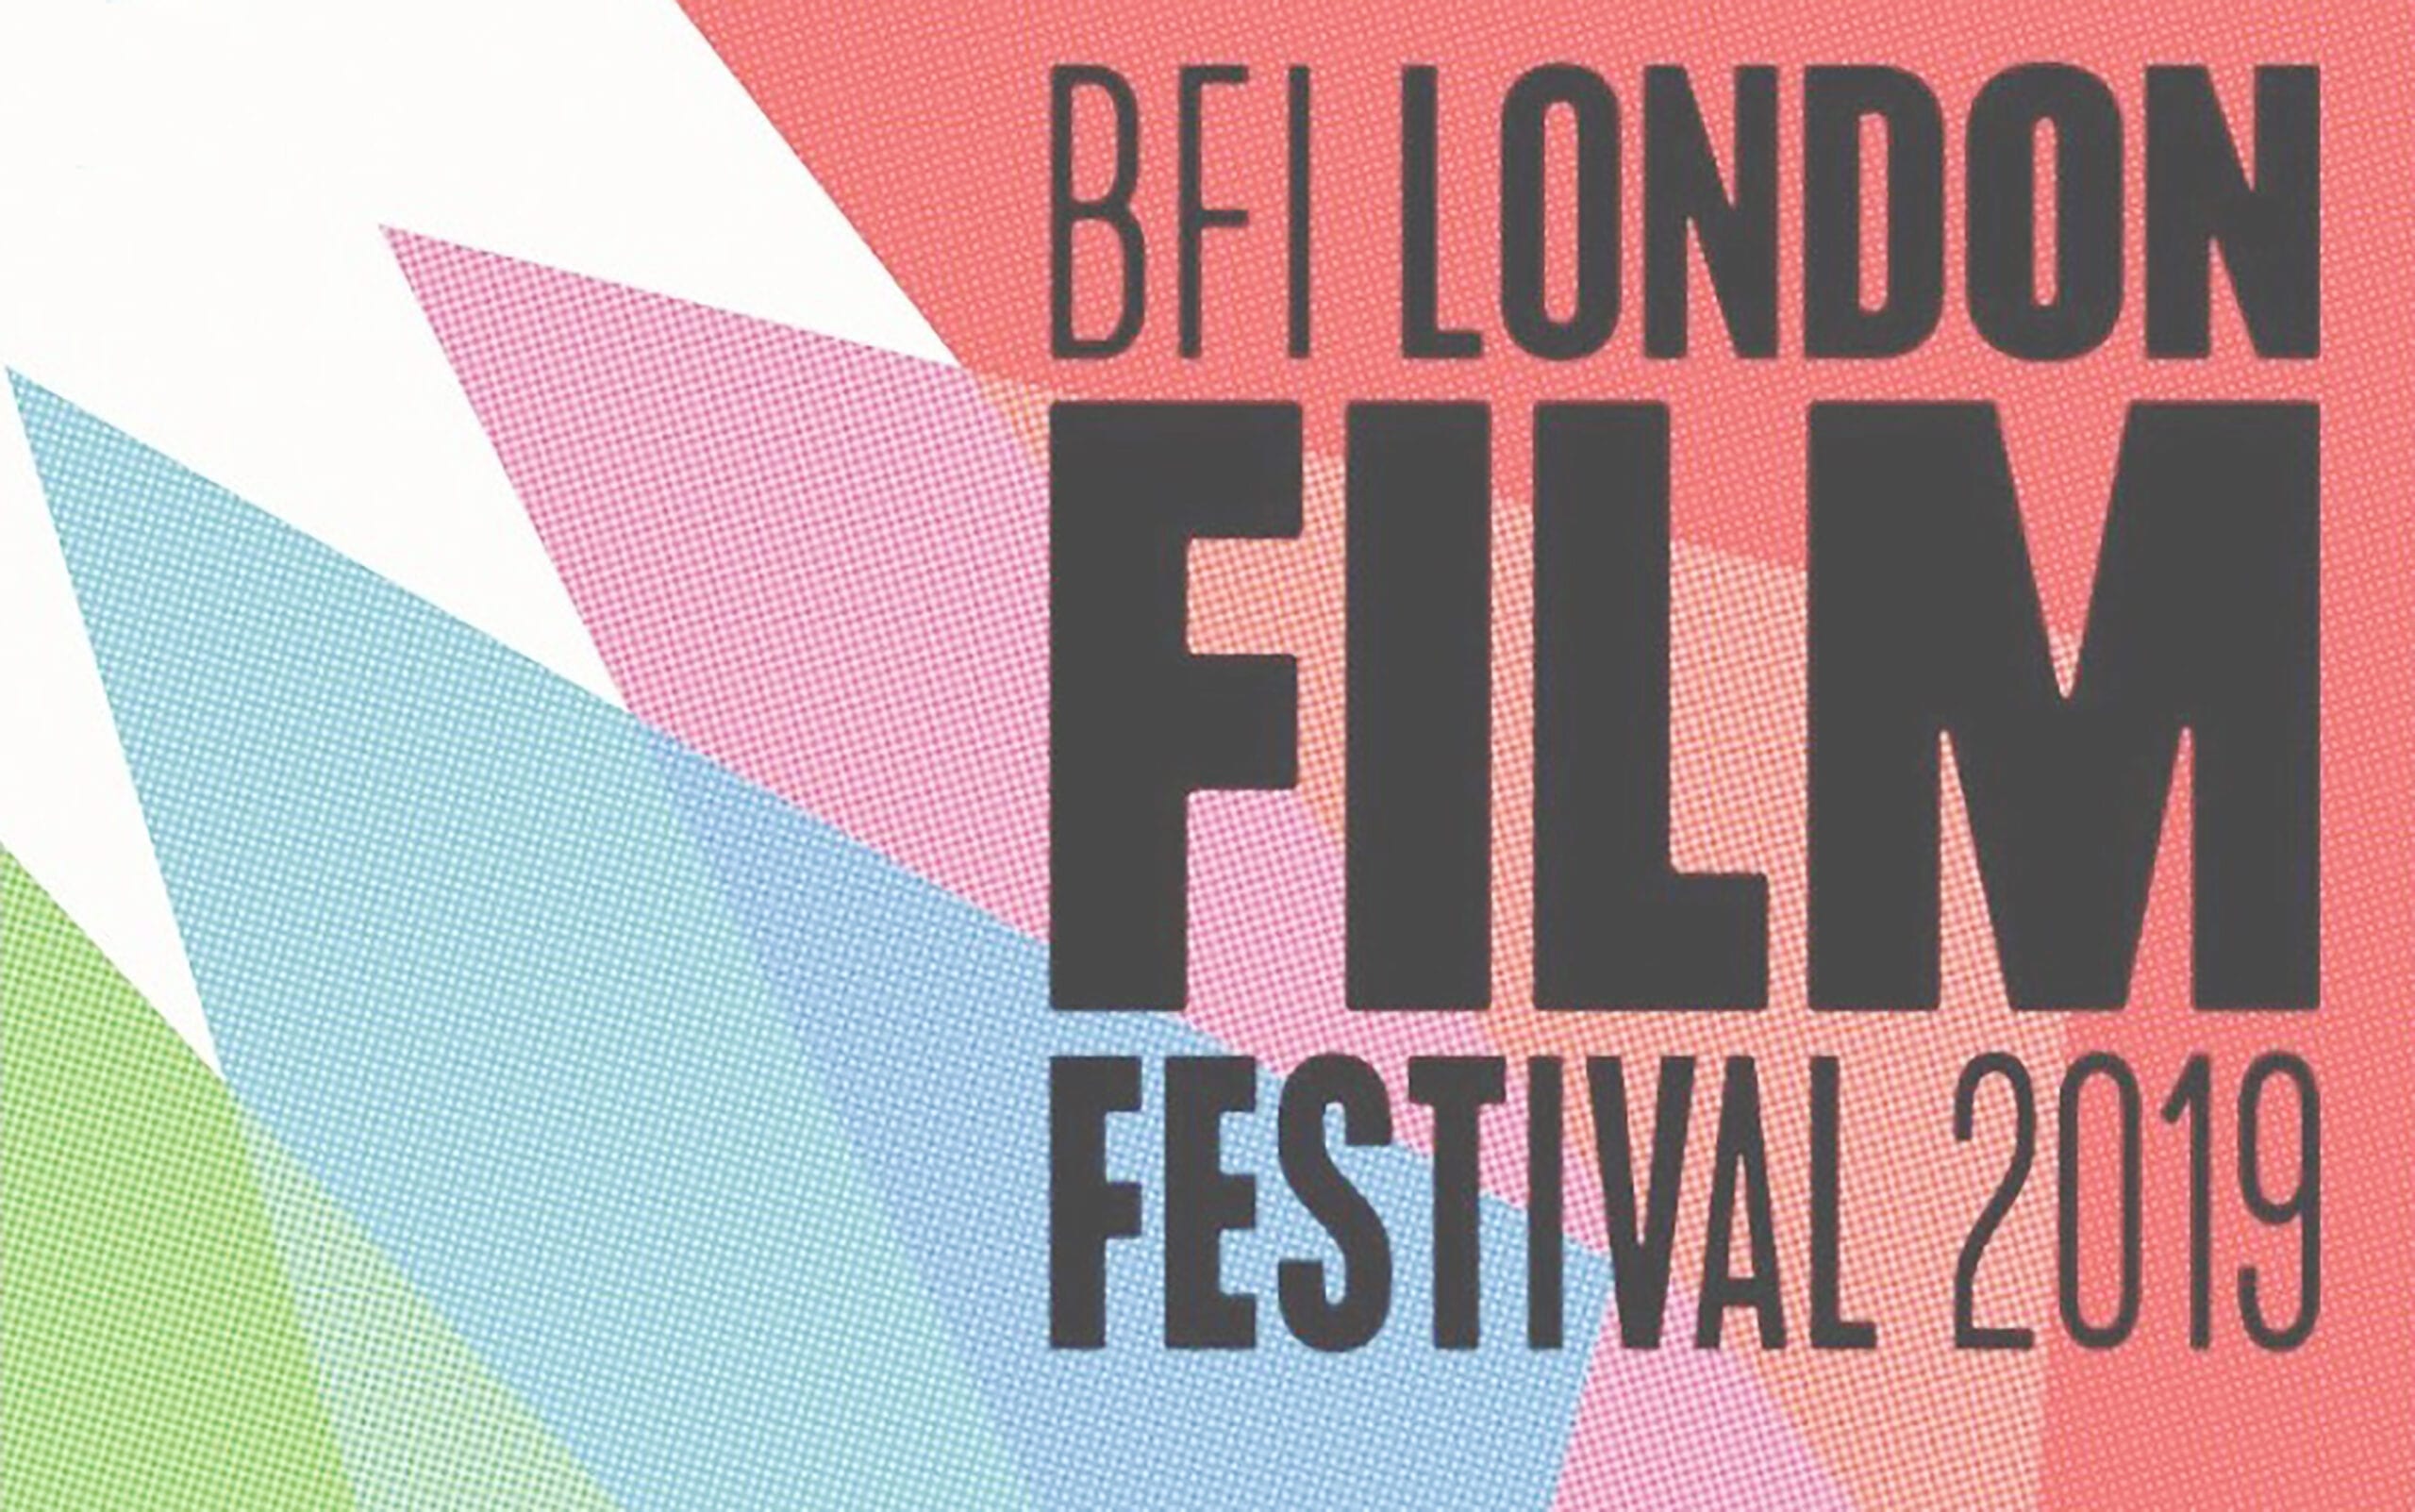 BFI London Film Festival